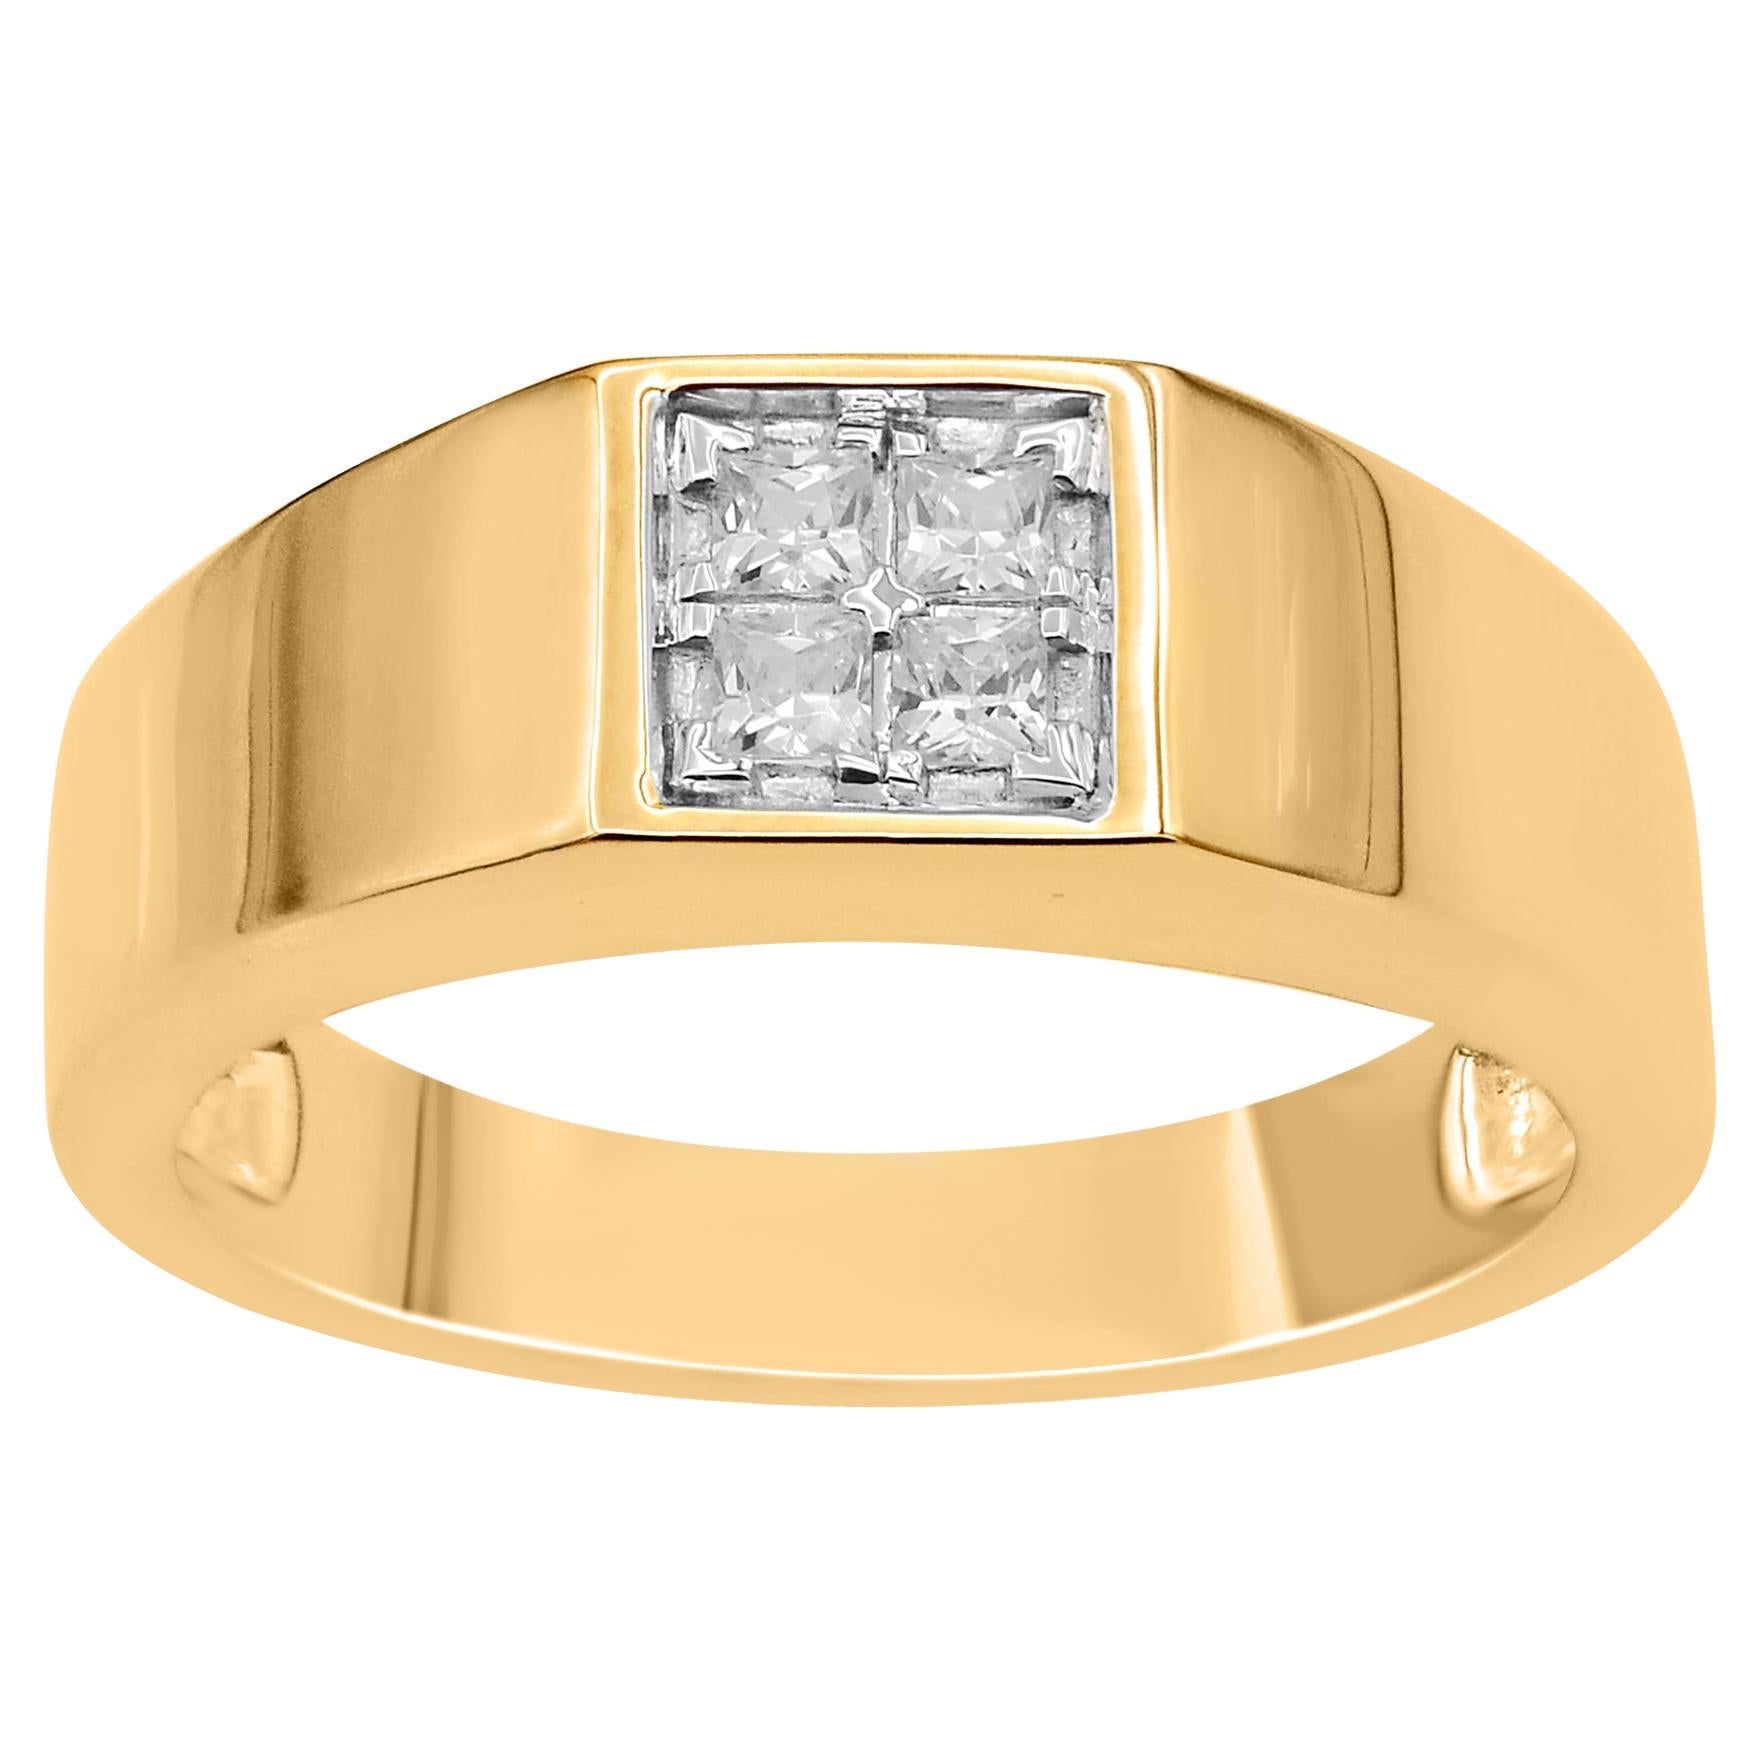 TJD 0.30 Carat Princess Cut Diamond 14KT Yellow Gold Men's Wedding Band Ring